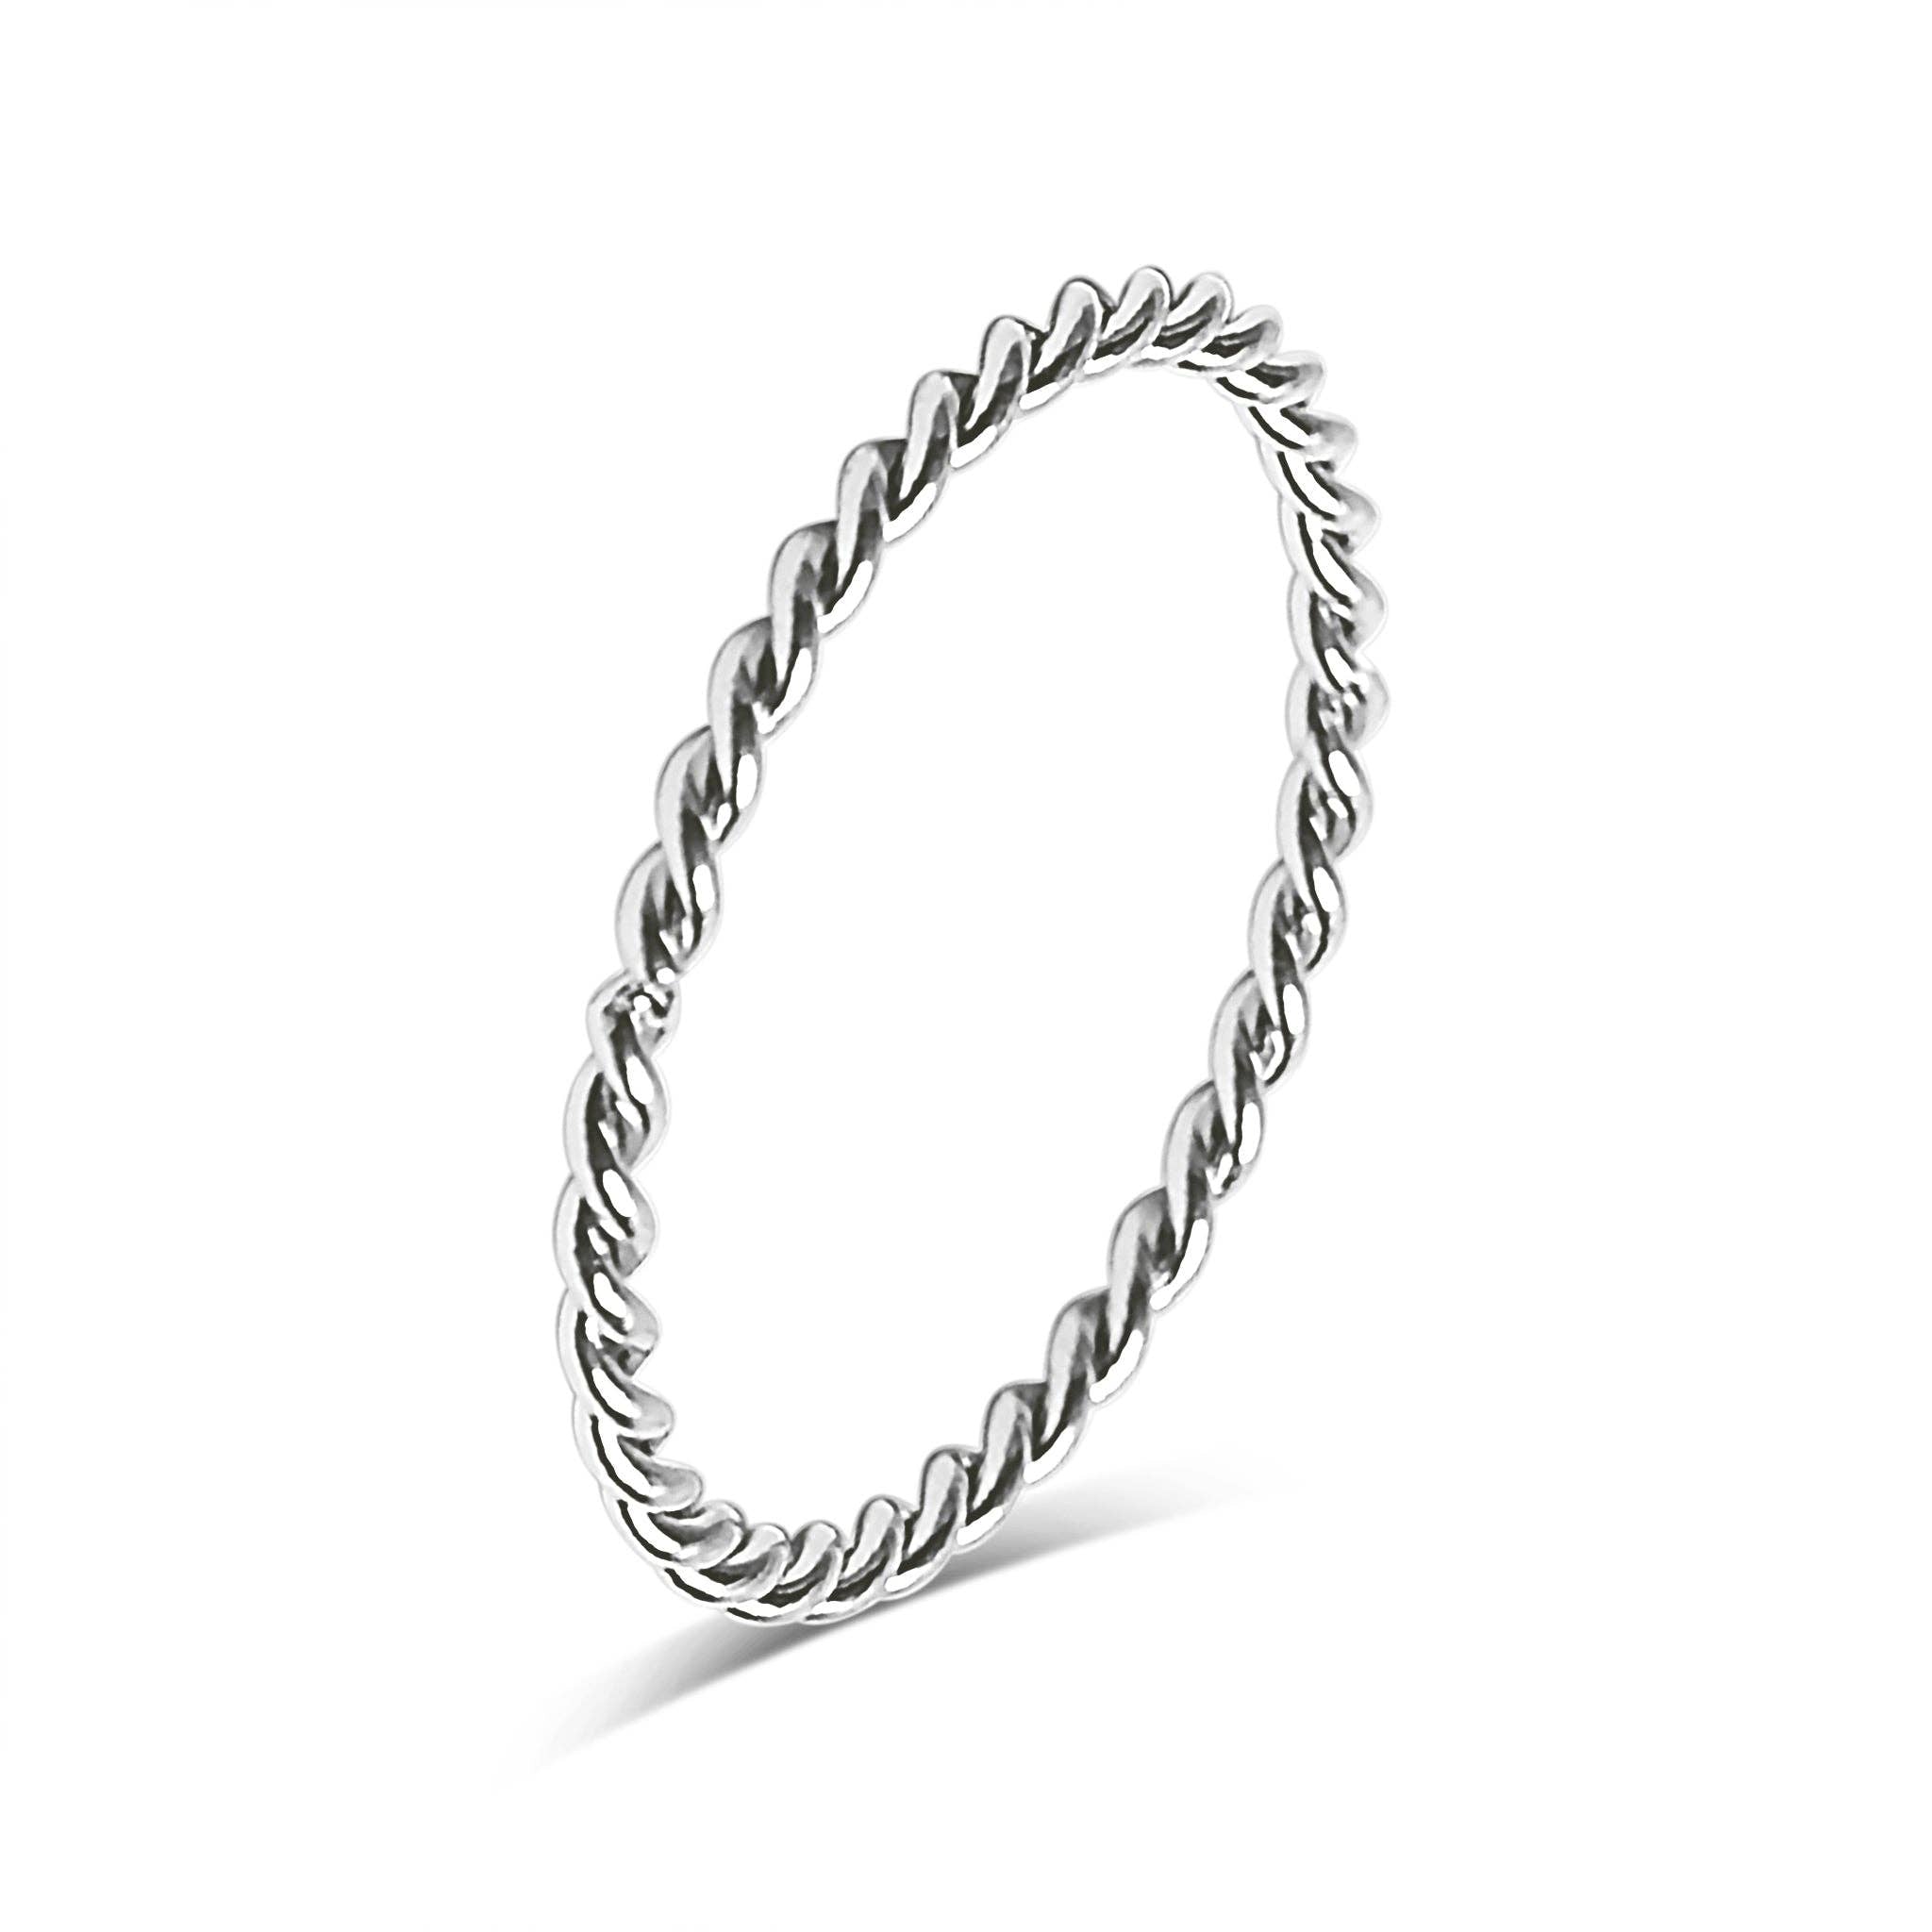 Stainless Steel Waterproof PVD Coated Braided Spacer Ring